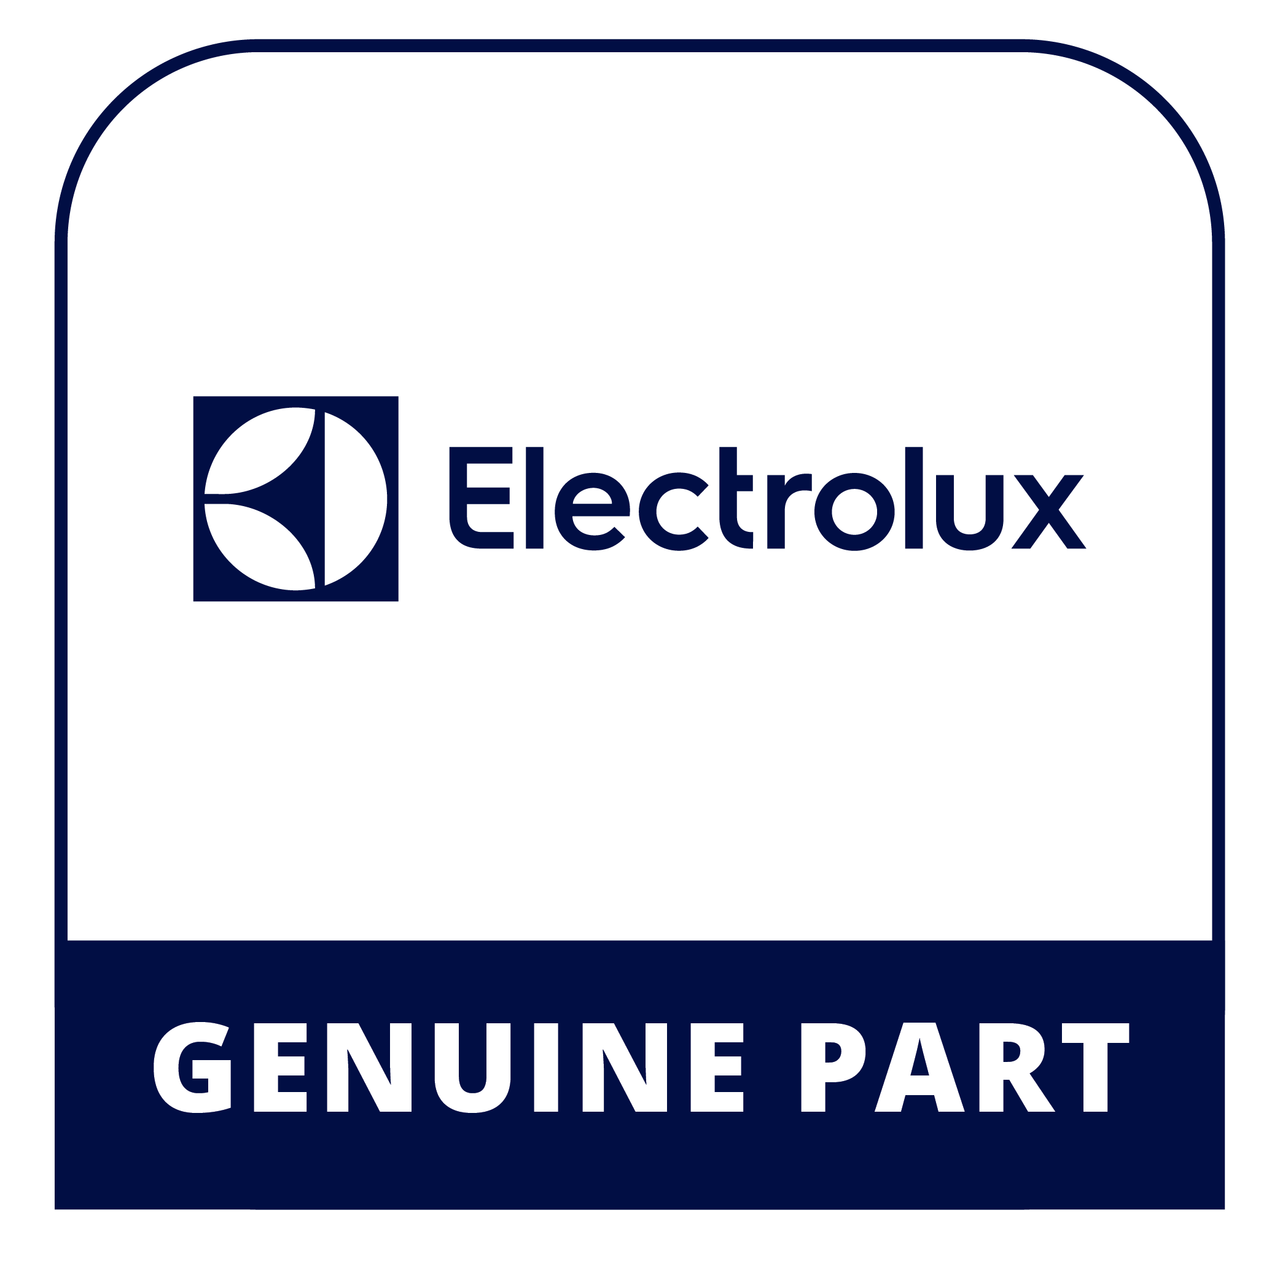 Frigidaire - Electrolux 241786007 - Gasket - Genuine Electrolux Part